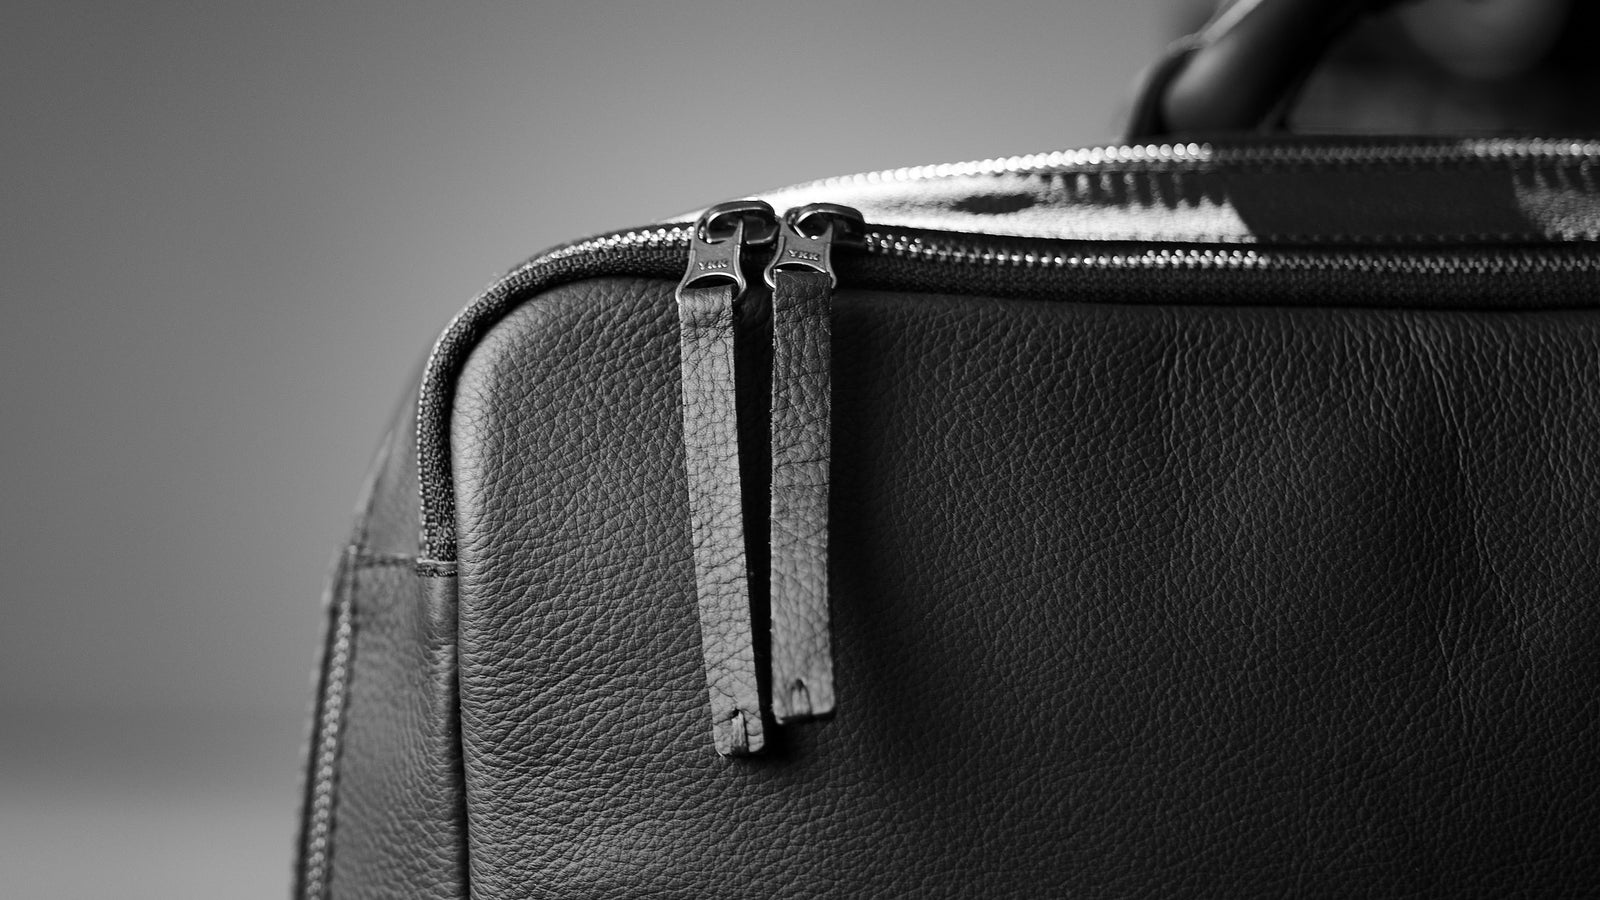 Polarity Weekender Travel Bag by Capra Leather